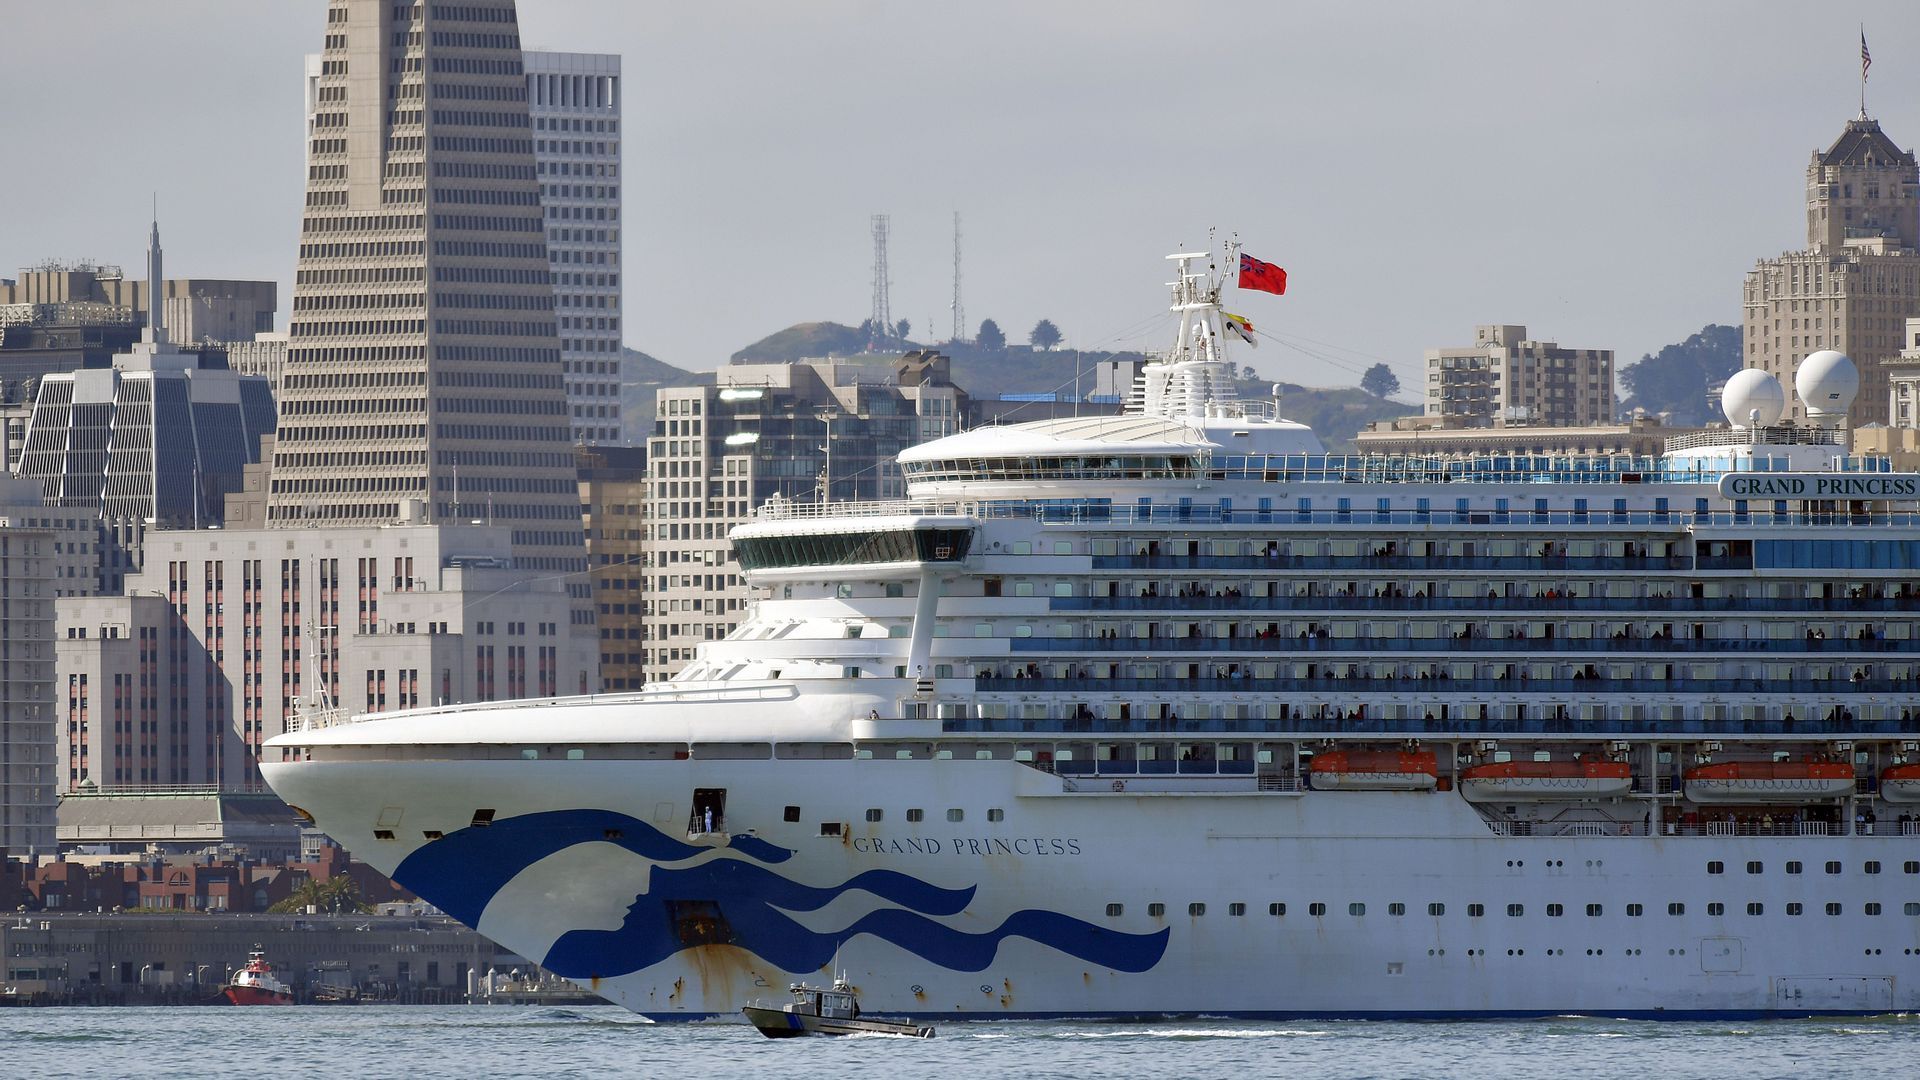 The Grand Princess docked in San Francisco